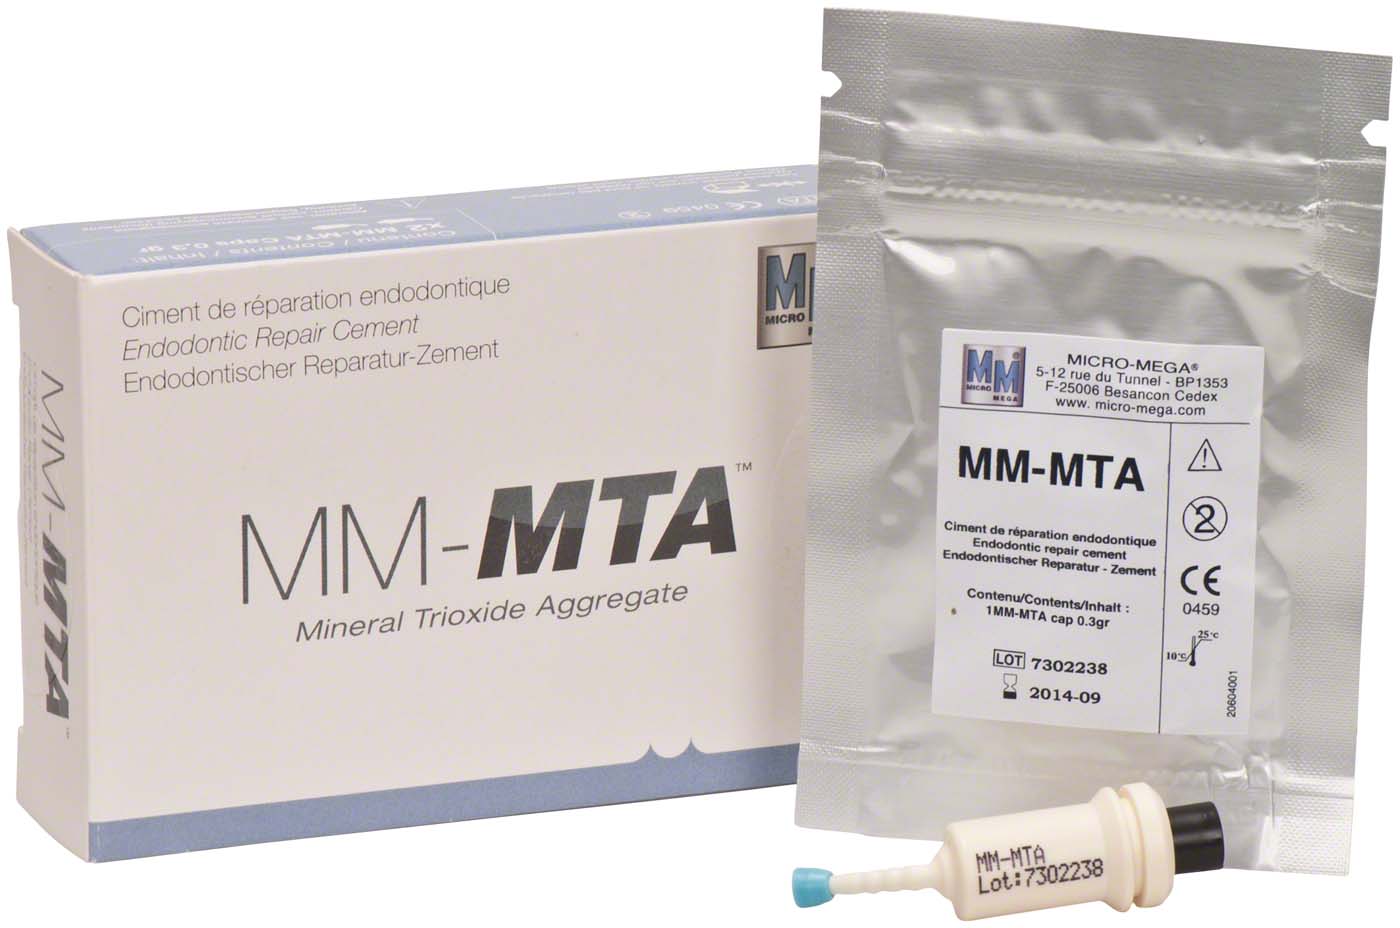 MM-MTA MICRO-MEGA